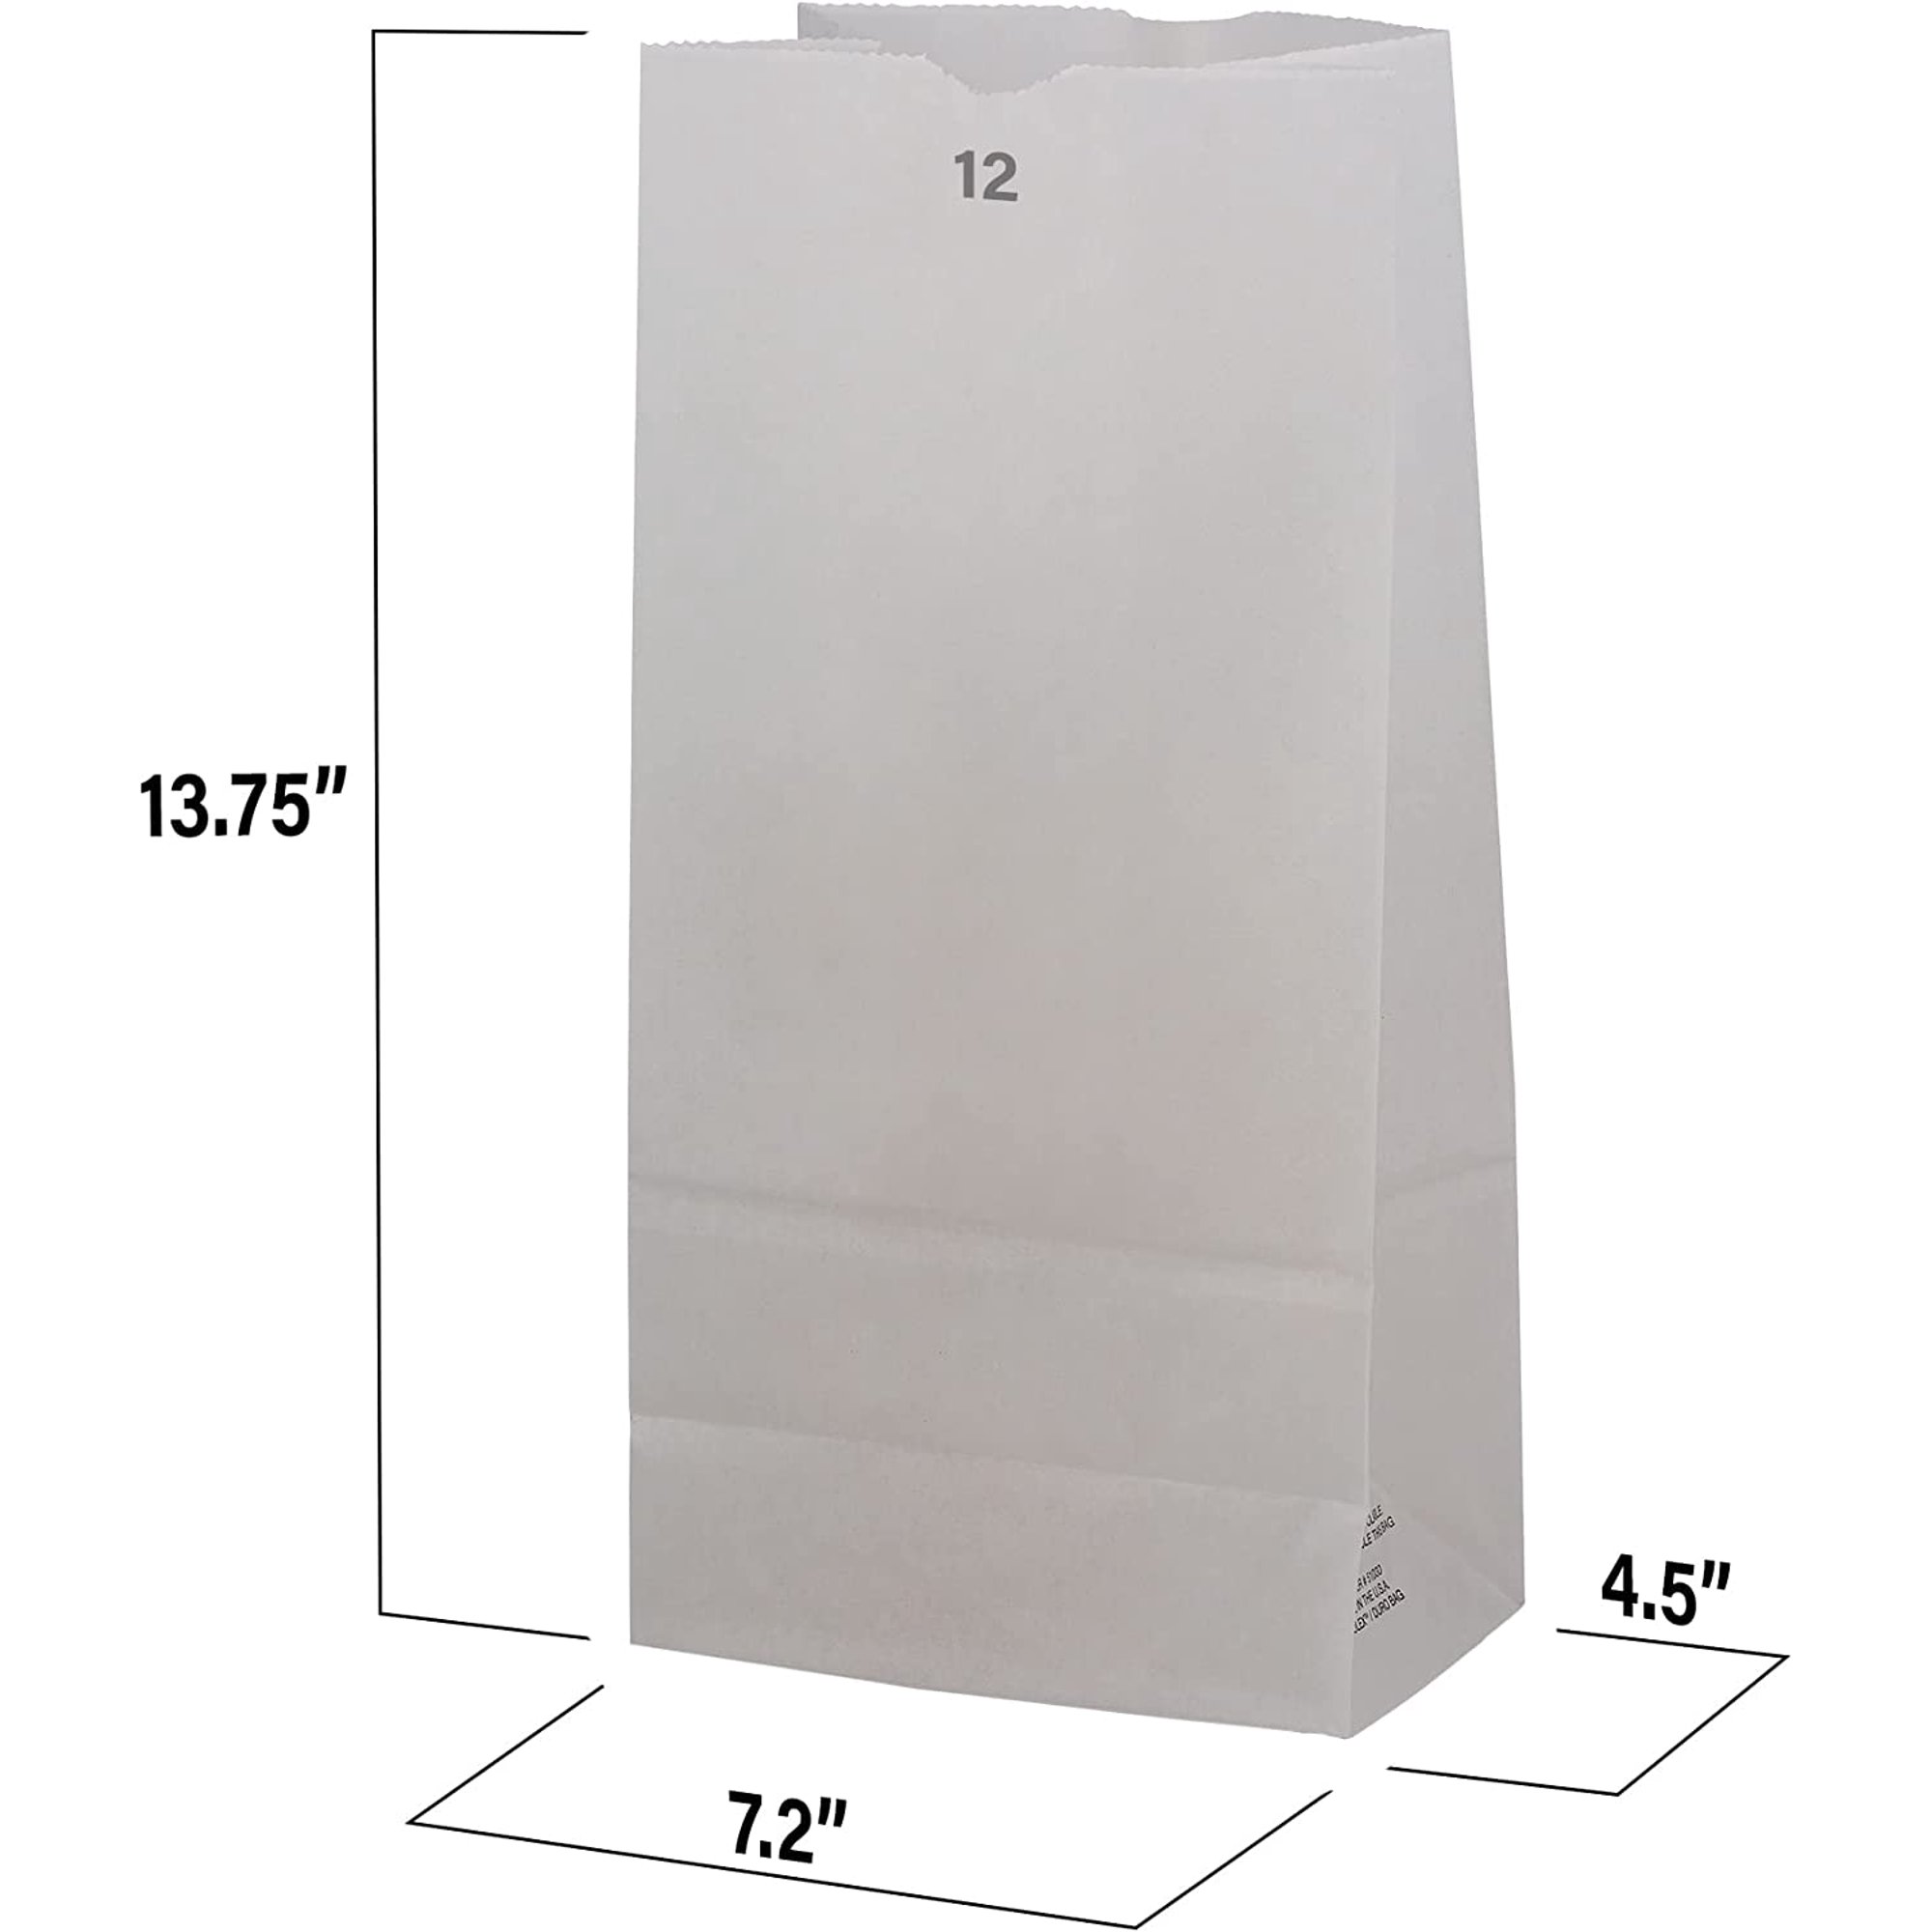 12lb White Paper Shopping Bags